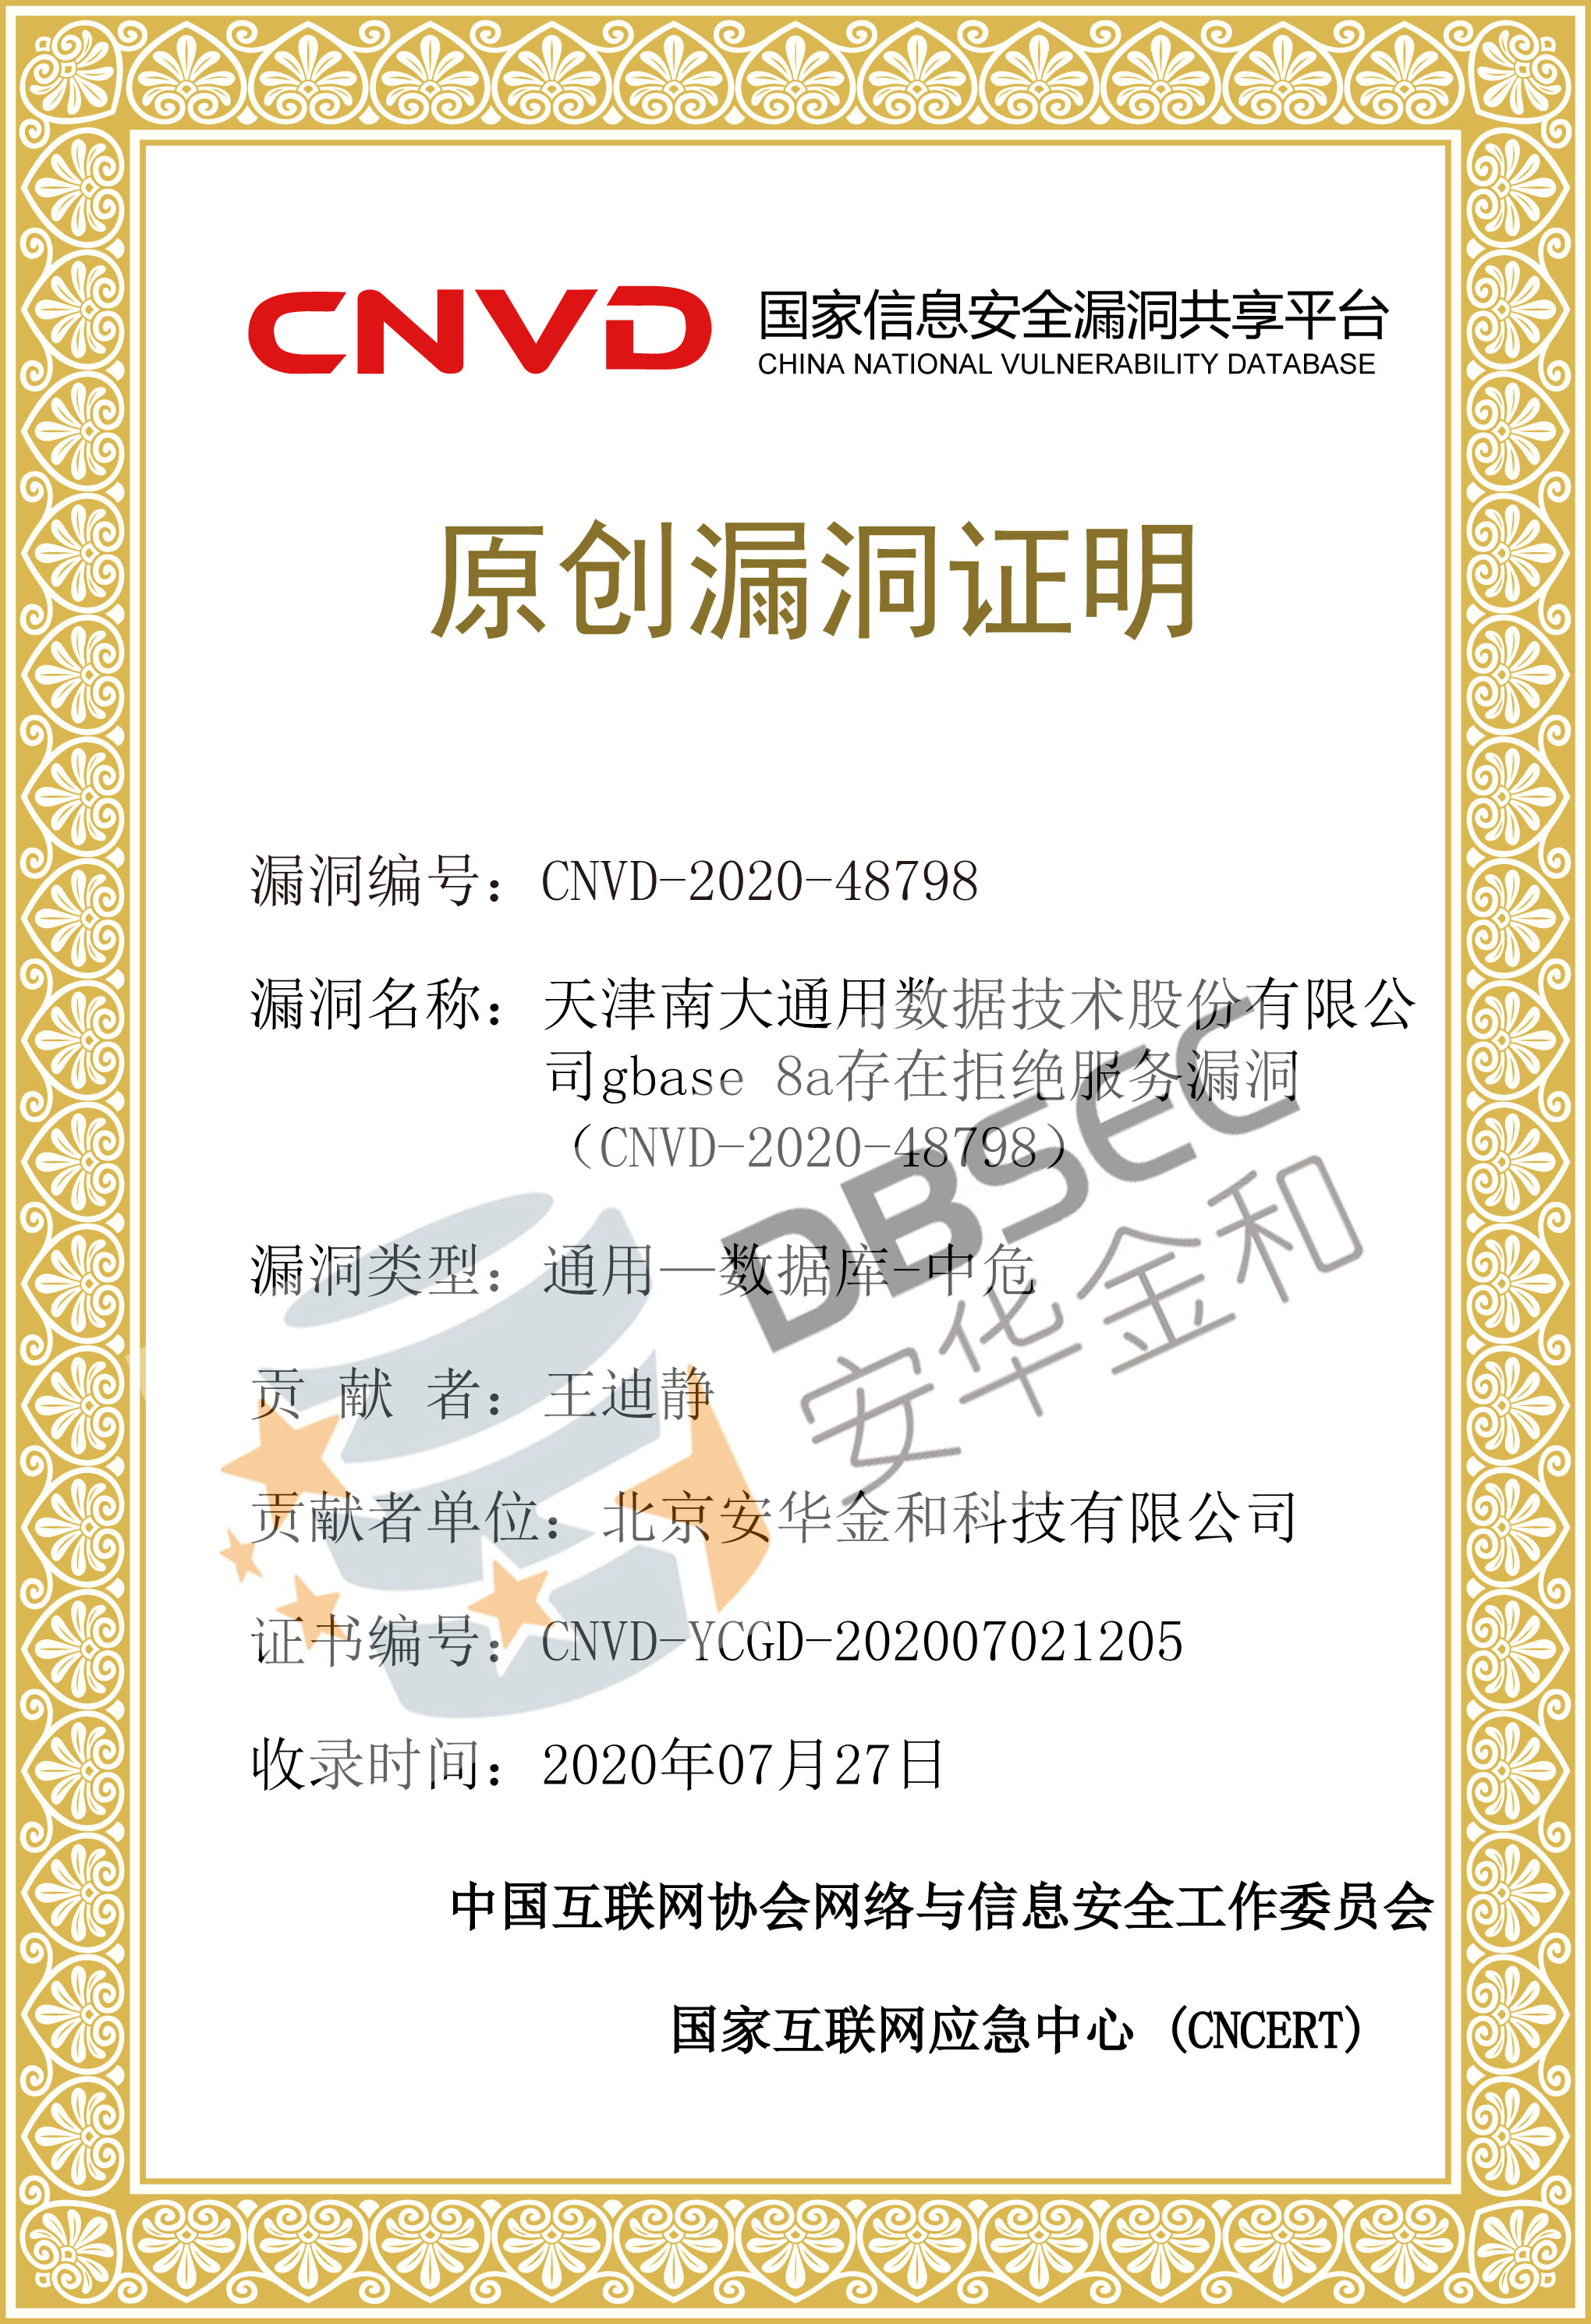 CNVD-YCGD-202007021205